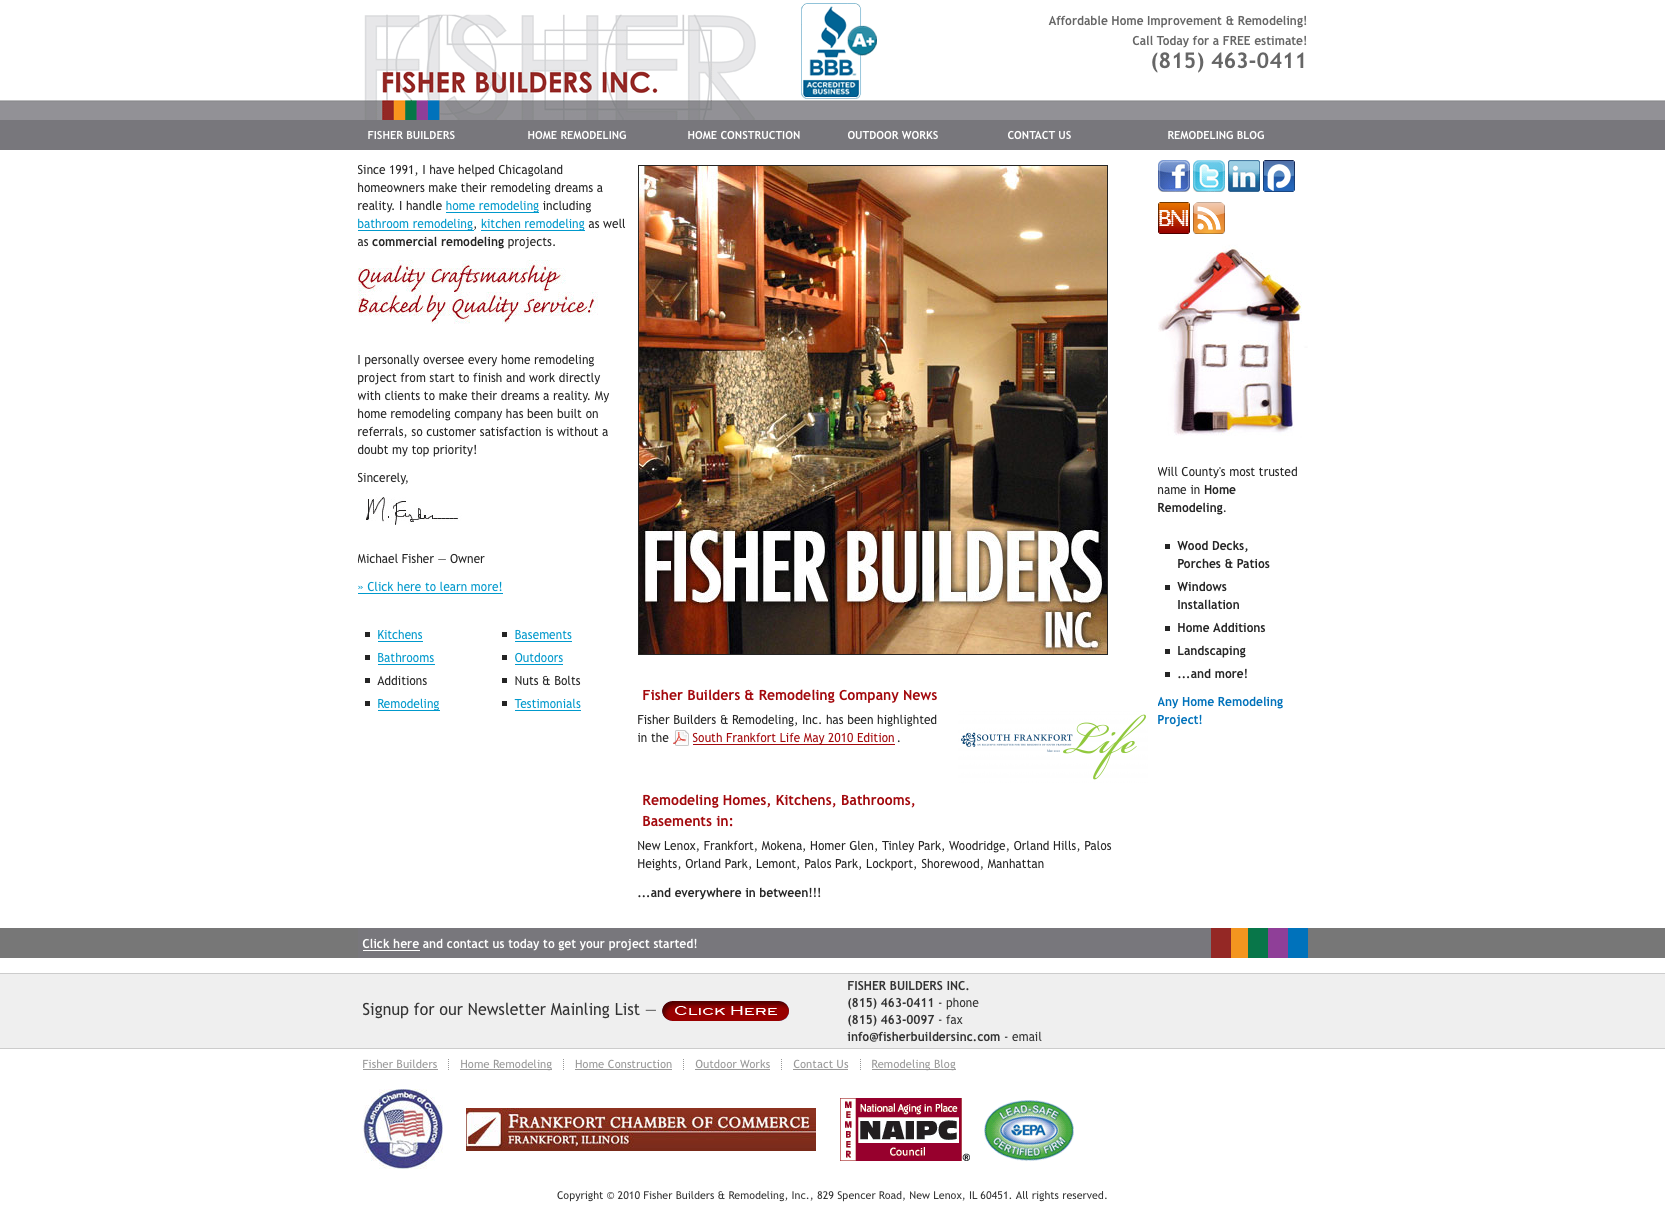 Fisher Builders, Inc. Home Remodeling (sonet)